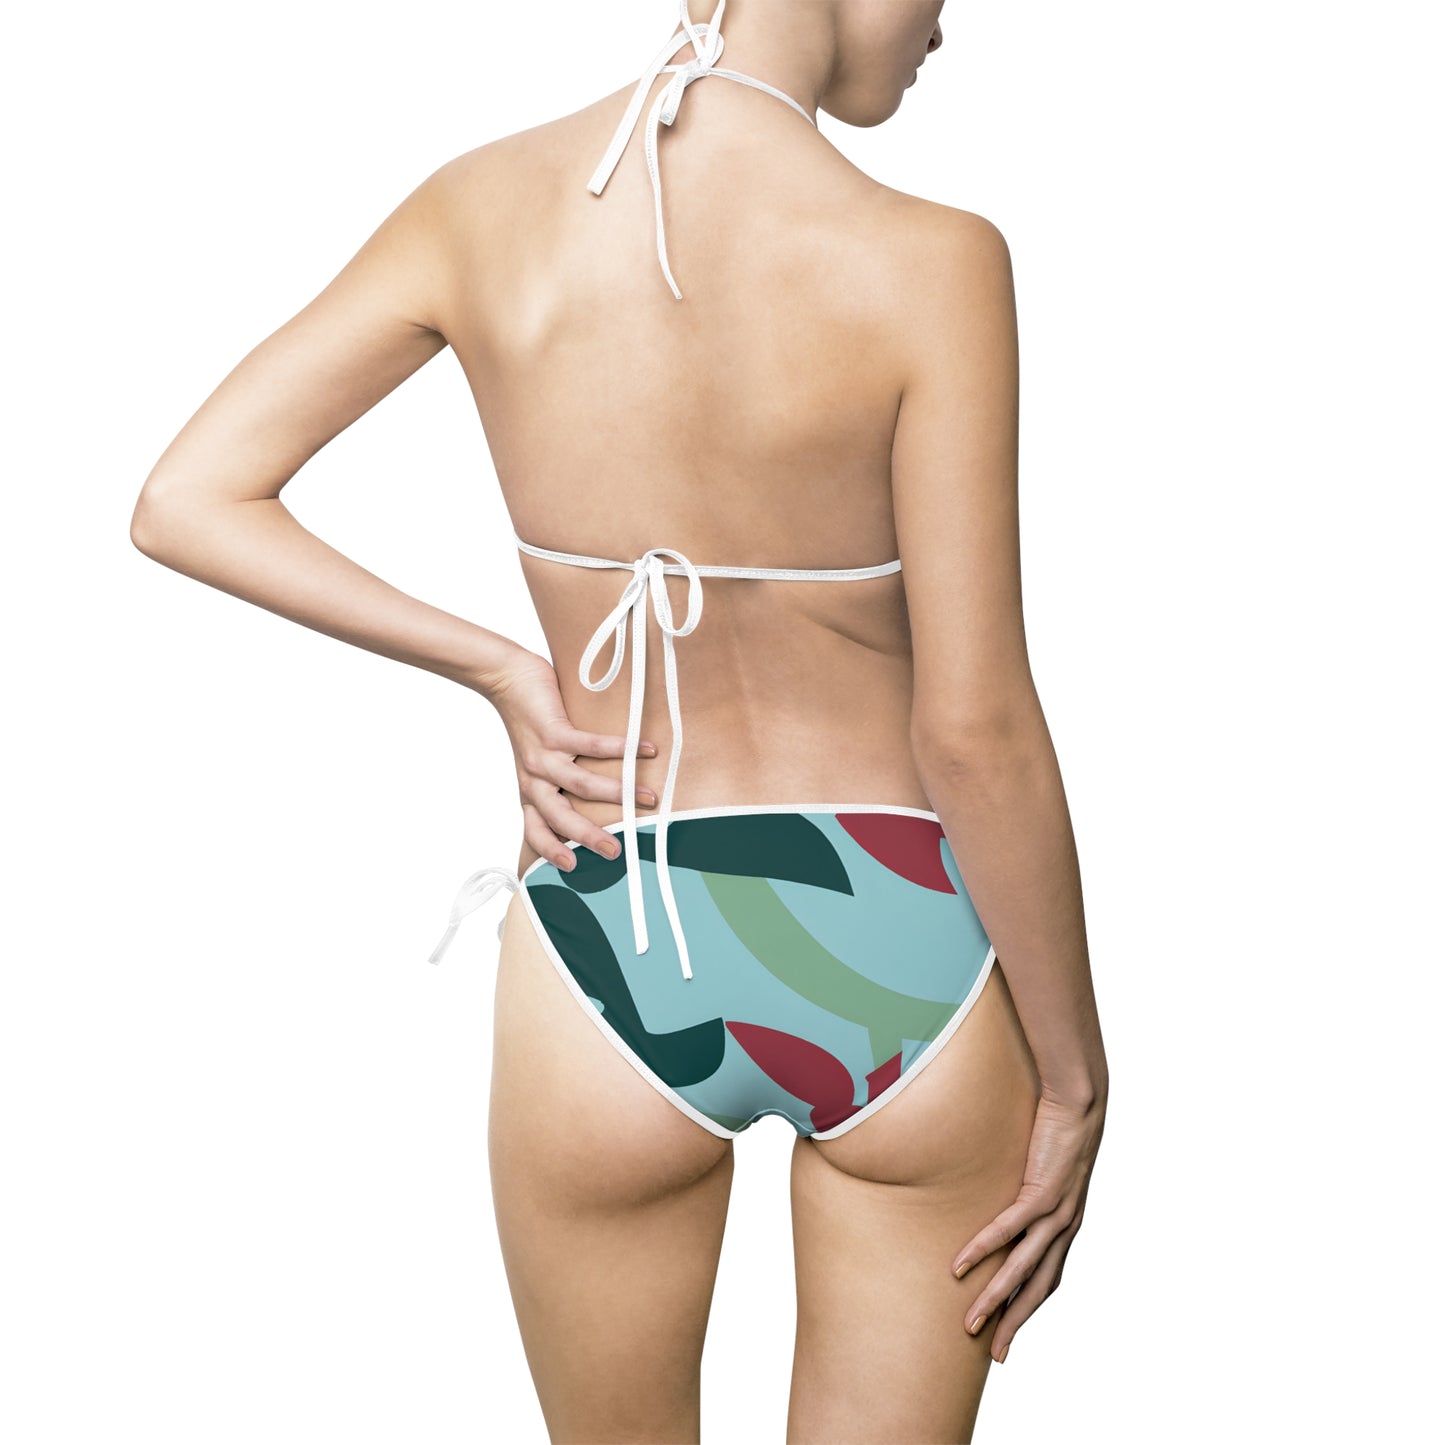 Chaparral Ione - Women's Bikini Swimsuit